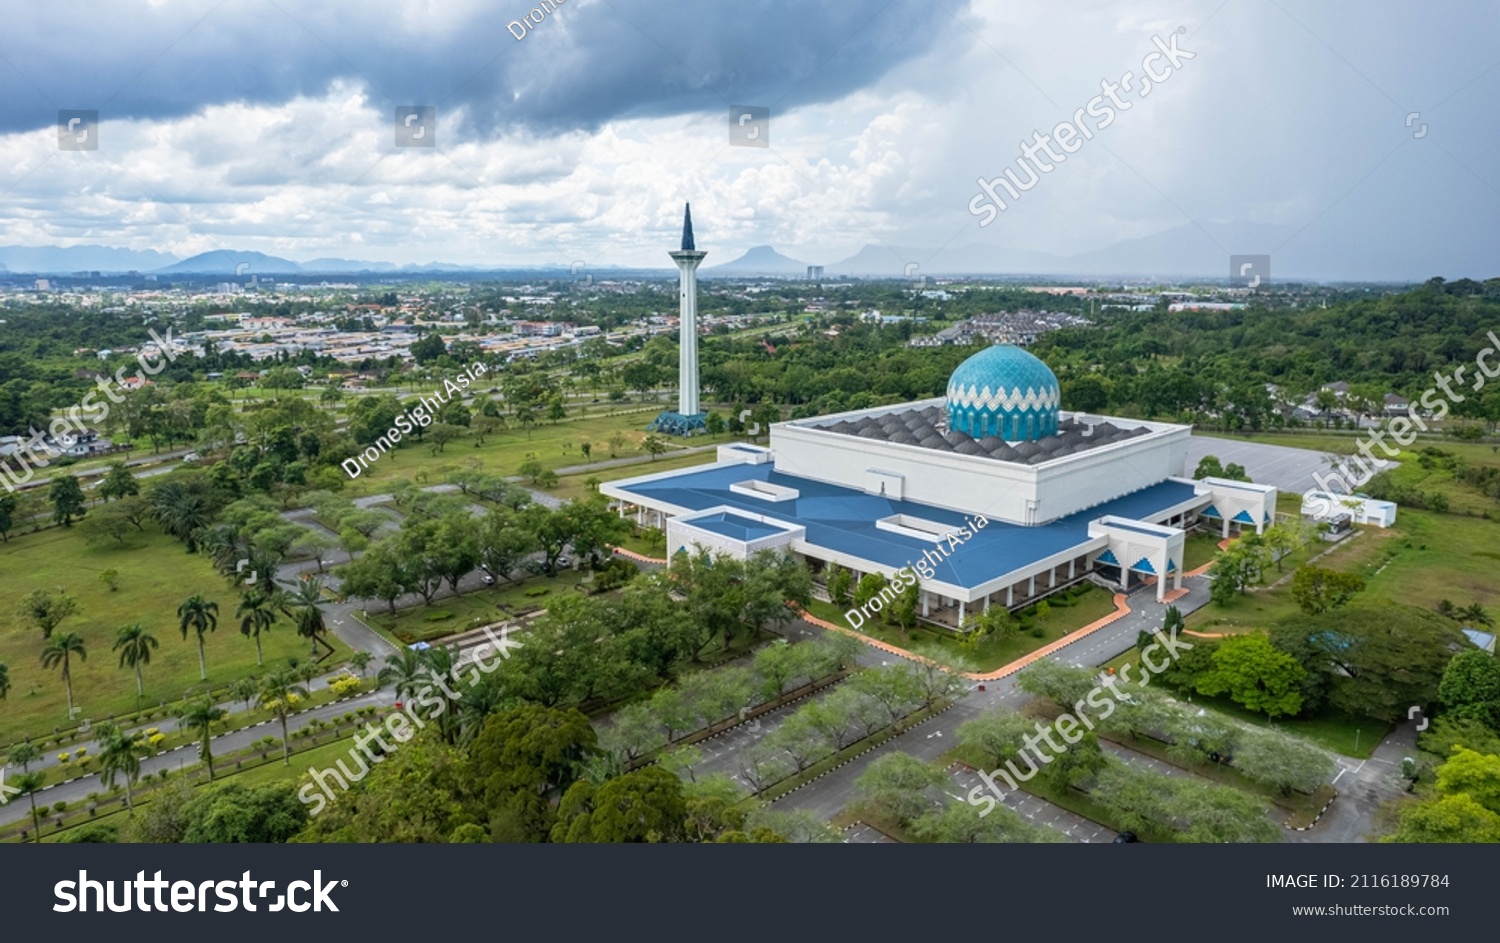 Masjid jamek kuching